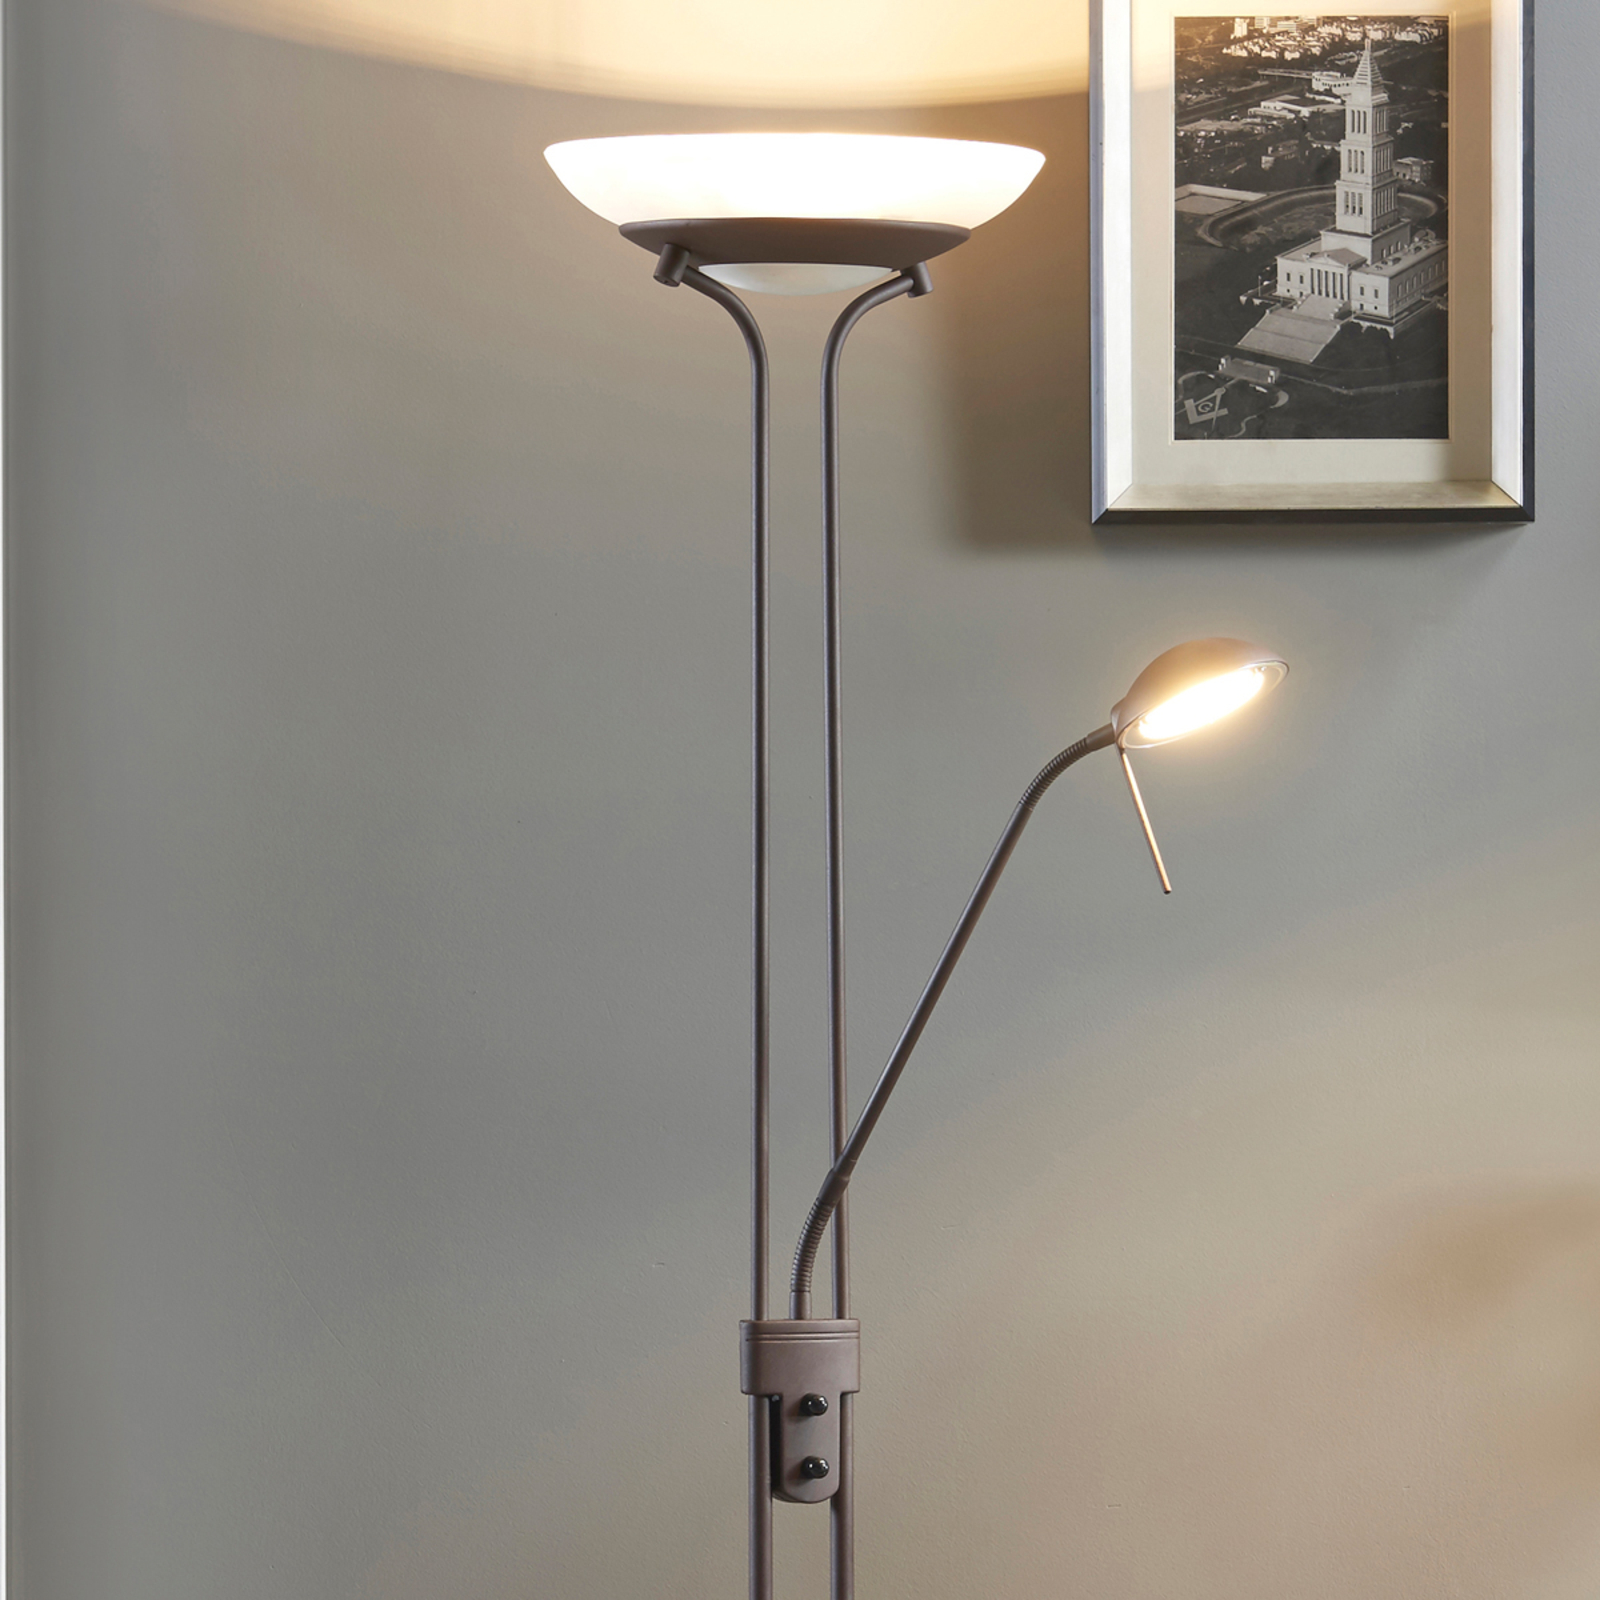 Yveta rustfarvet uplight-lampe med lysdæmper | Lampegiganten.dk